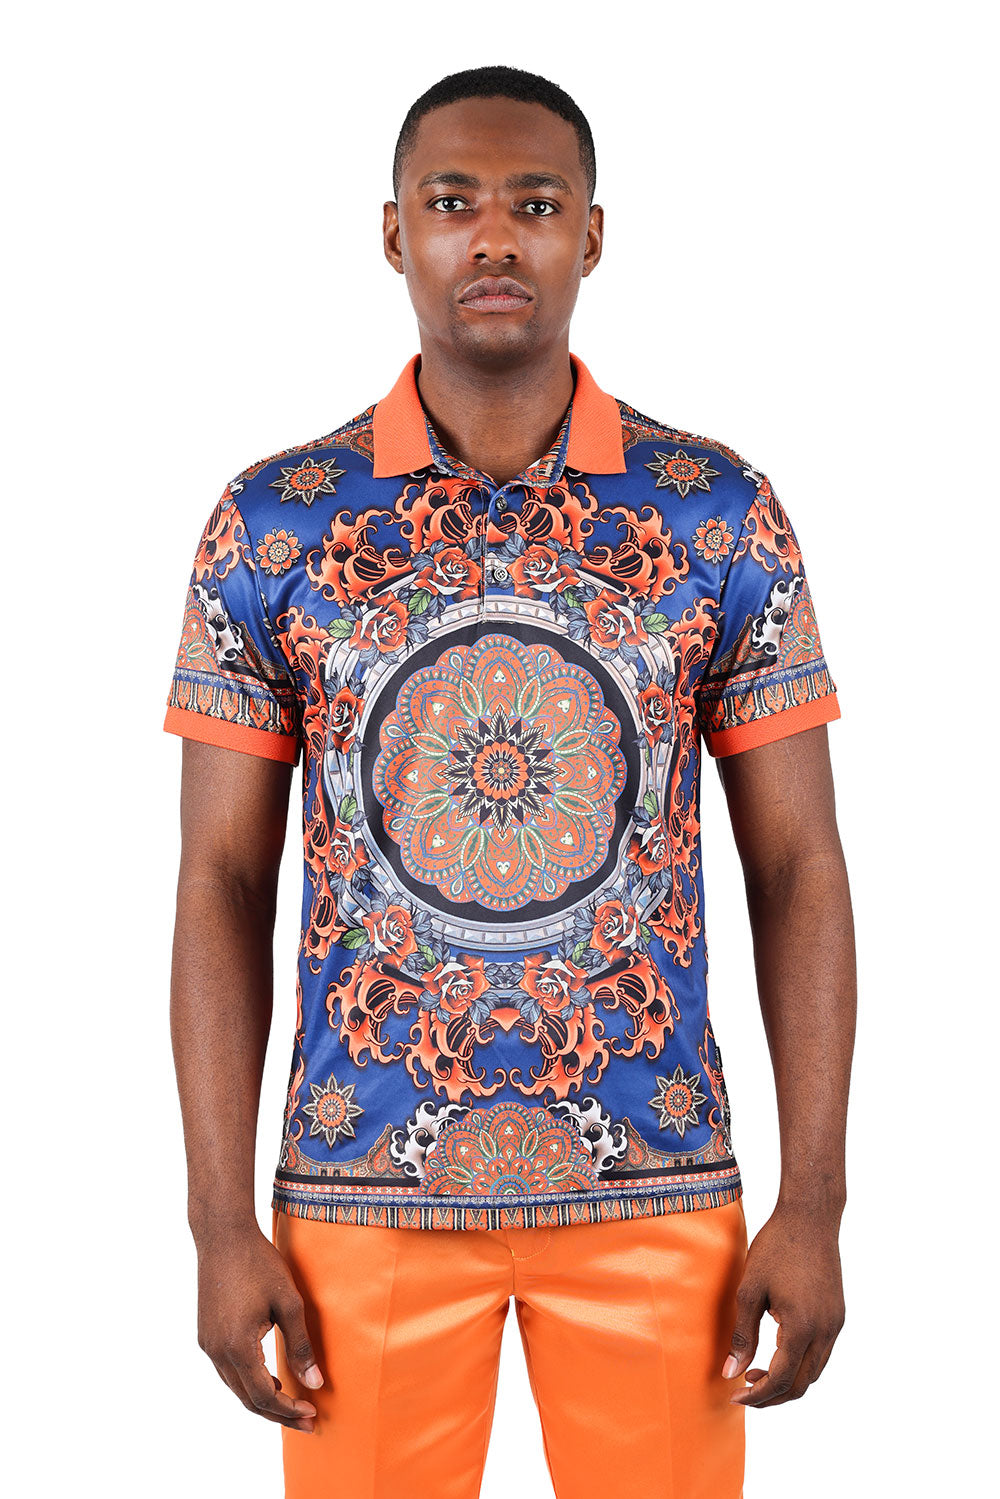 Barabas Men's Floral Circular Prints Graphic Tee Polo Shirts 3PSP13 Orange Navy